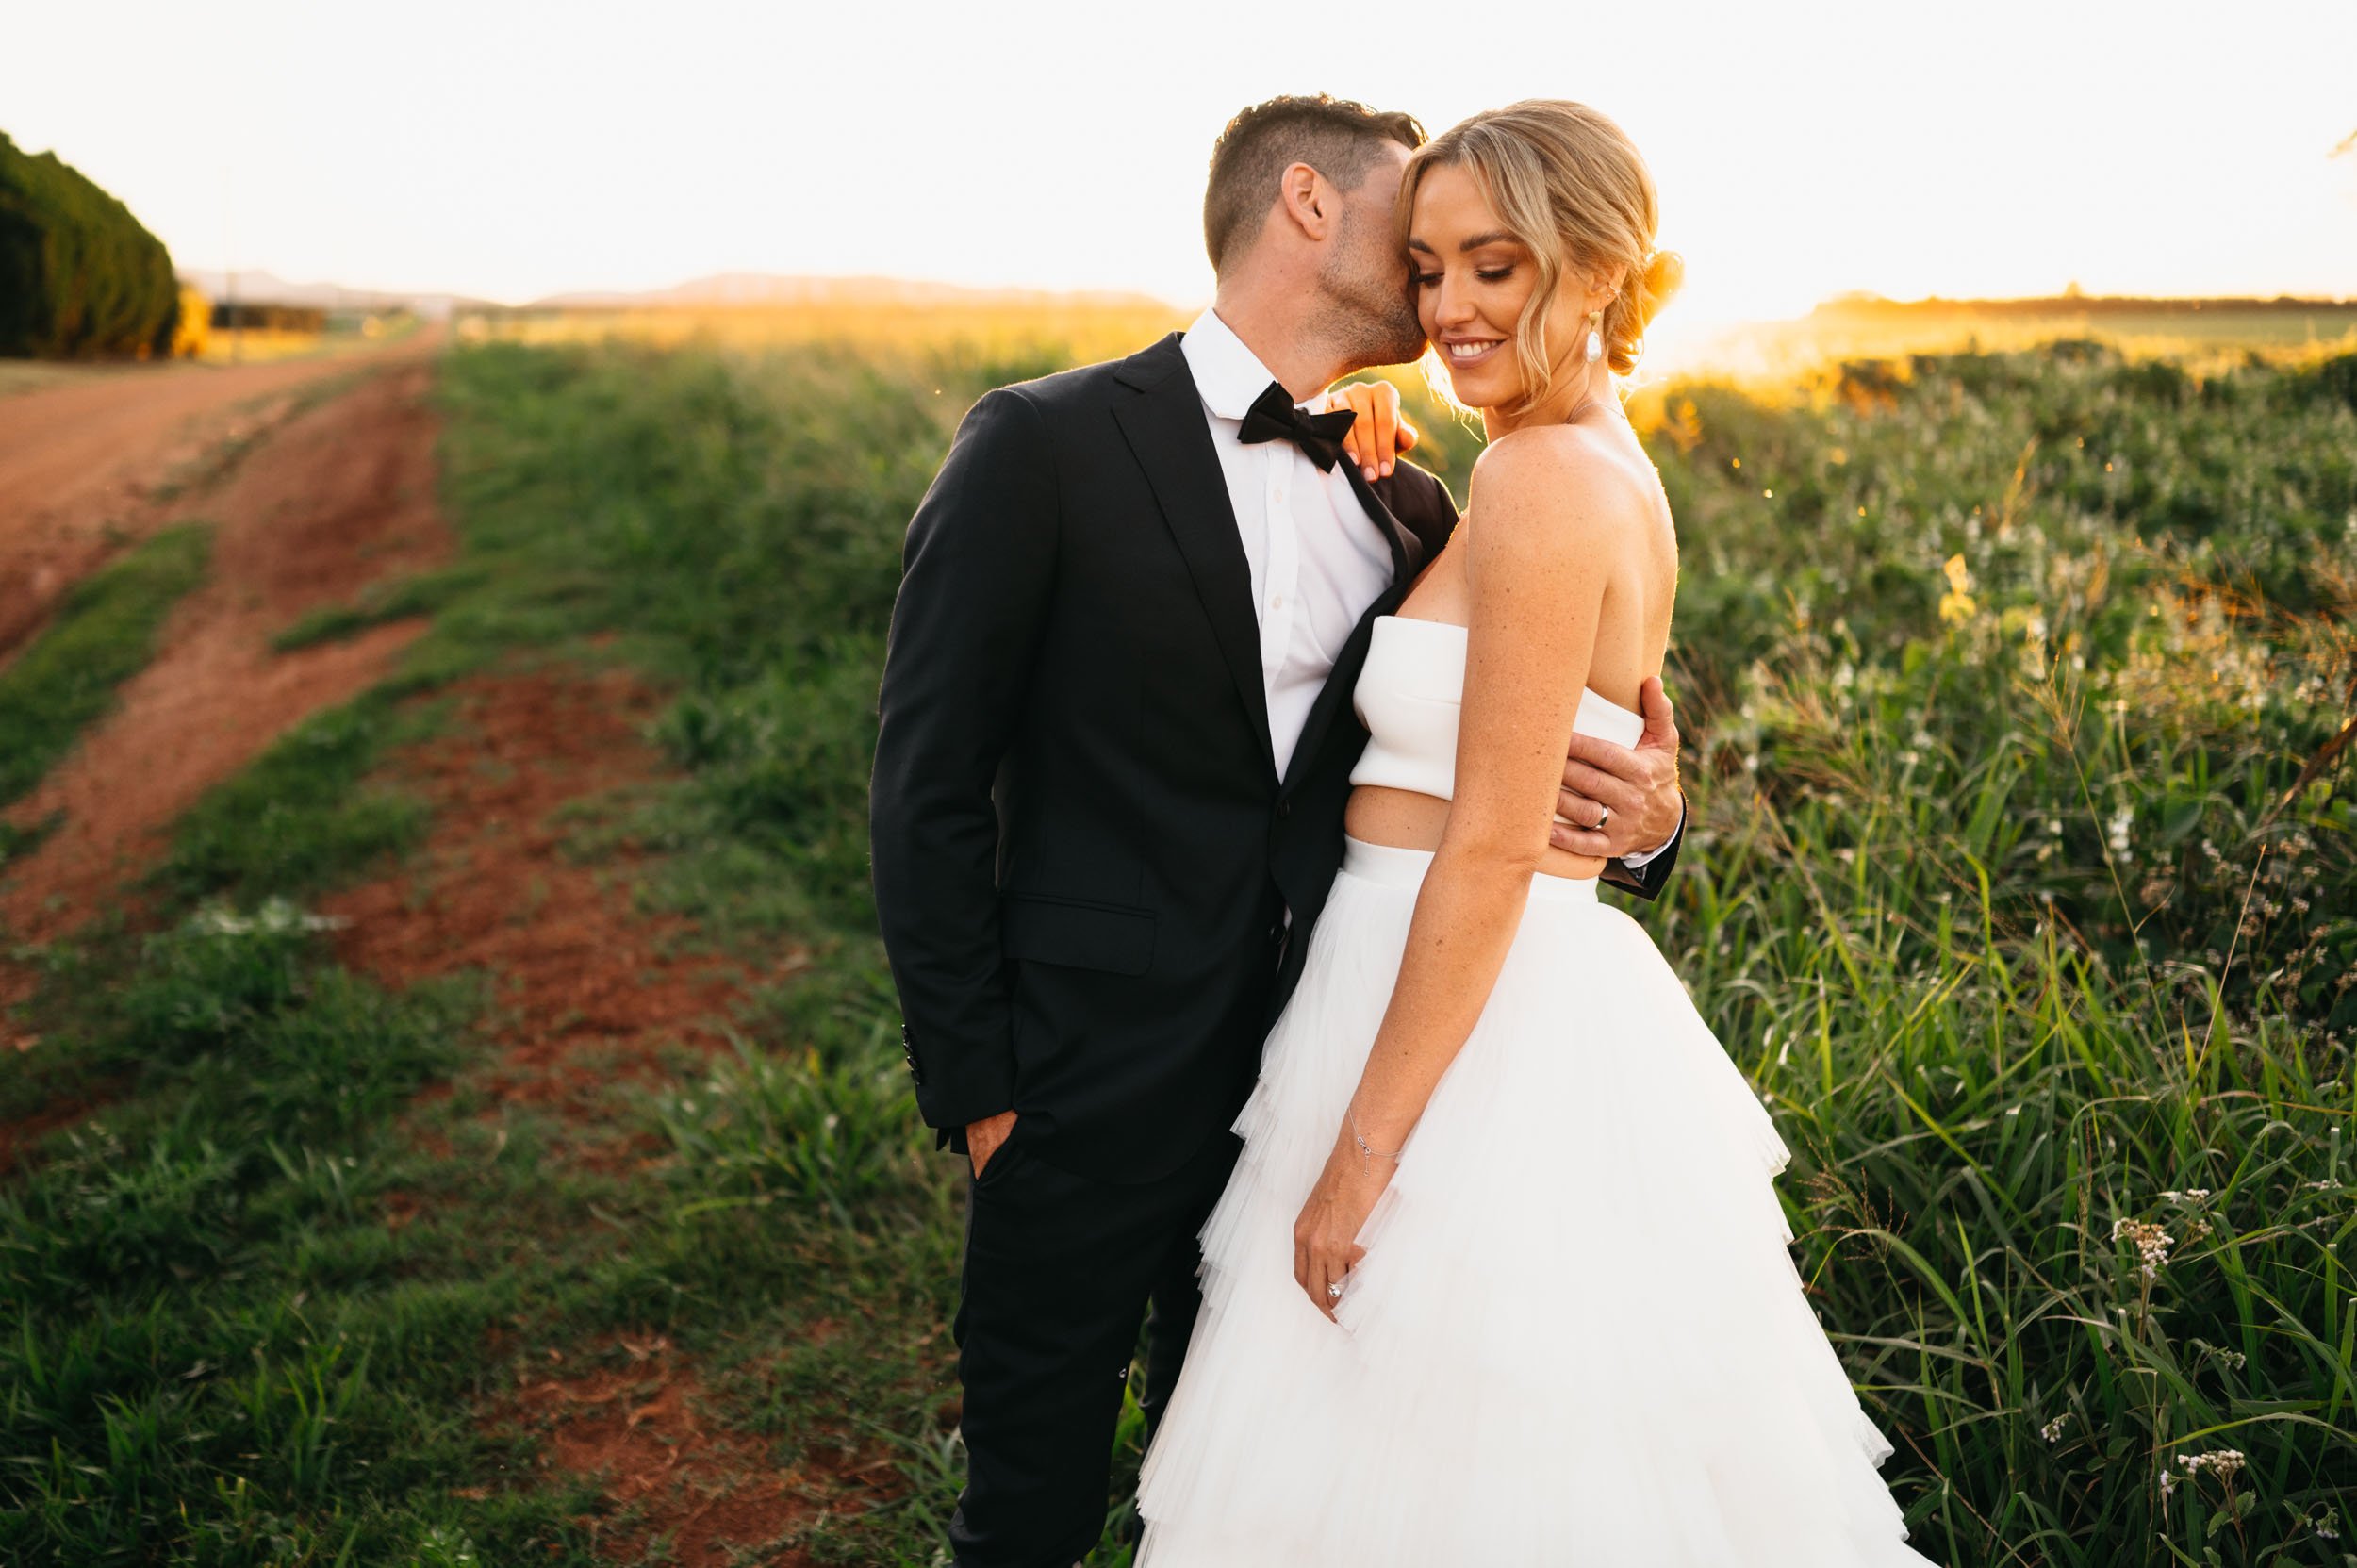 The Raw Photographer - Cairns Wedding Photographer - Mareeba Tablelands - Queensland photography - Kyha dress - luxury-62.jpg